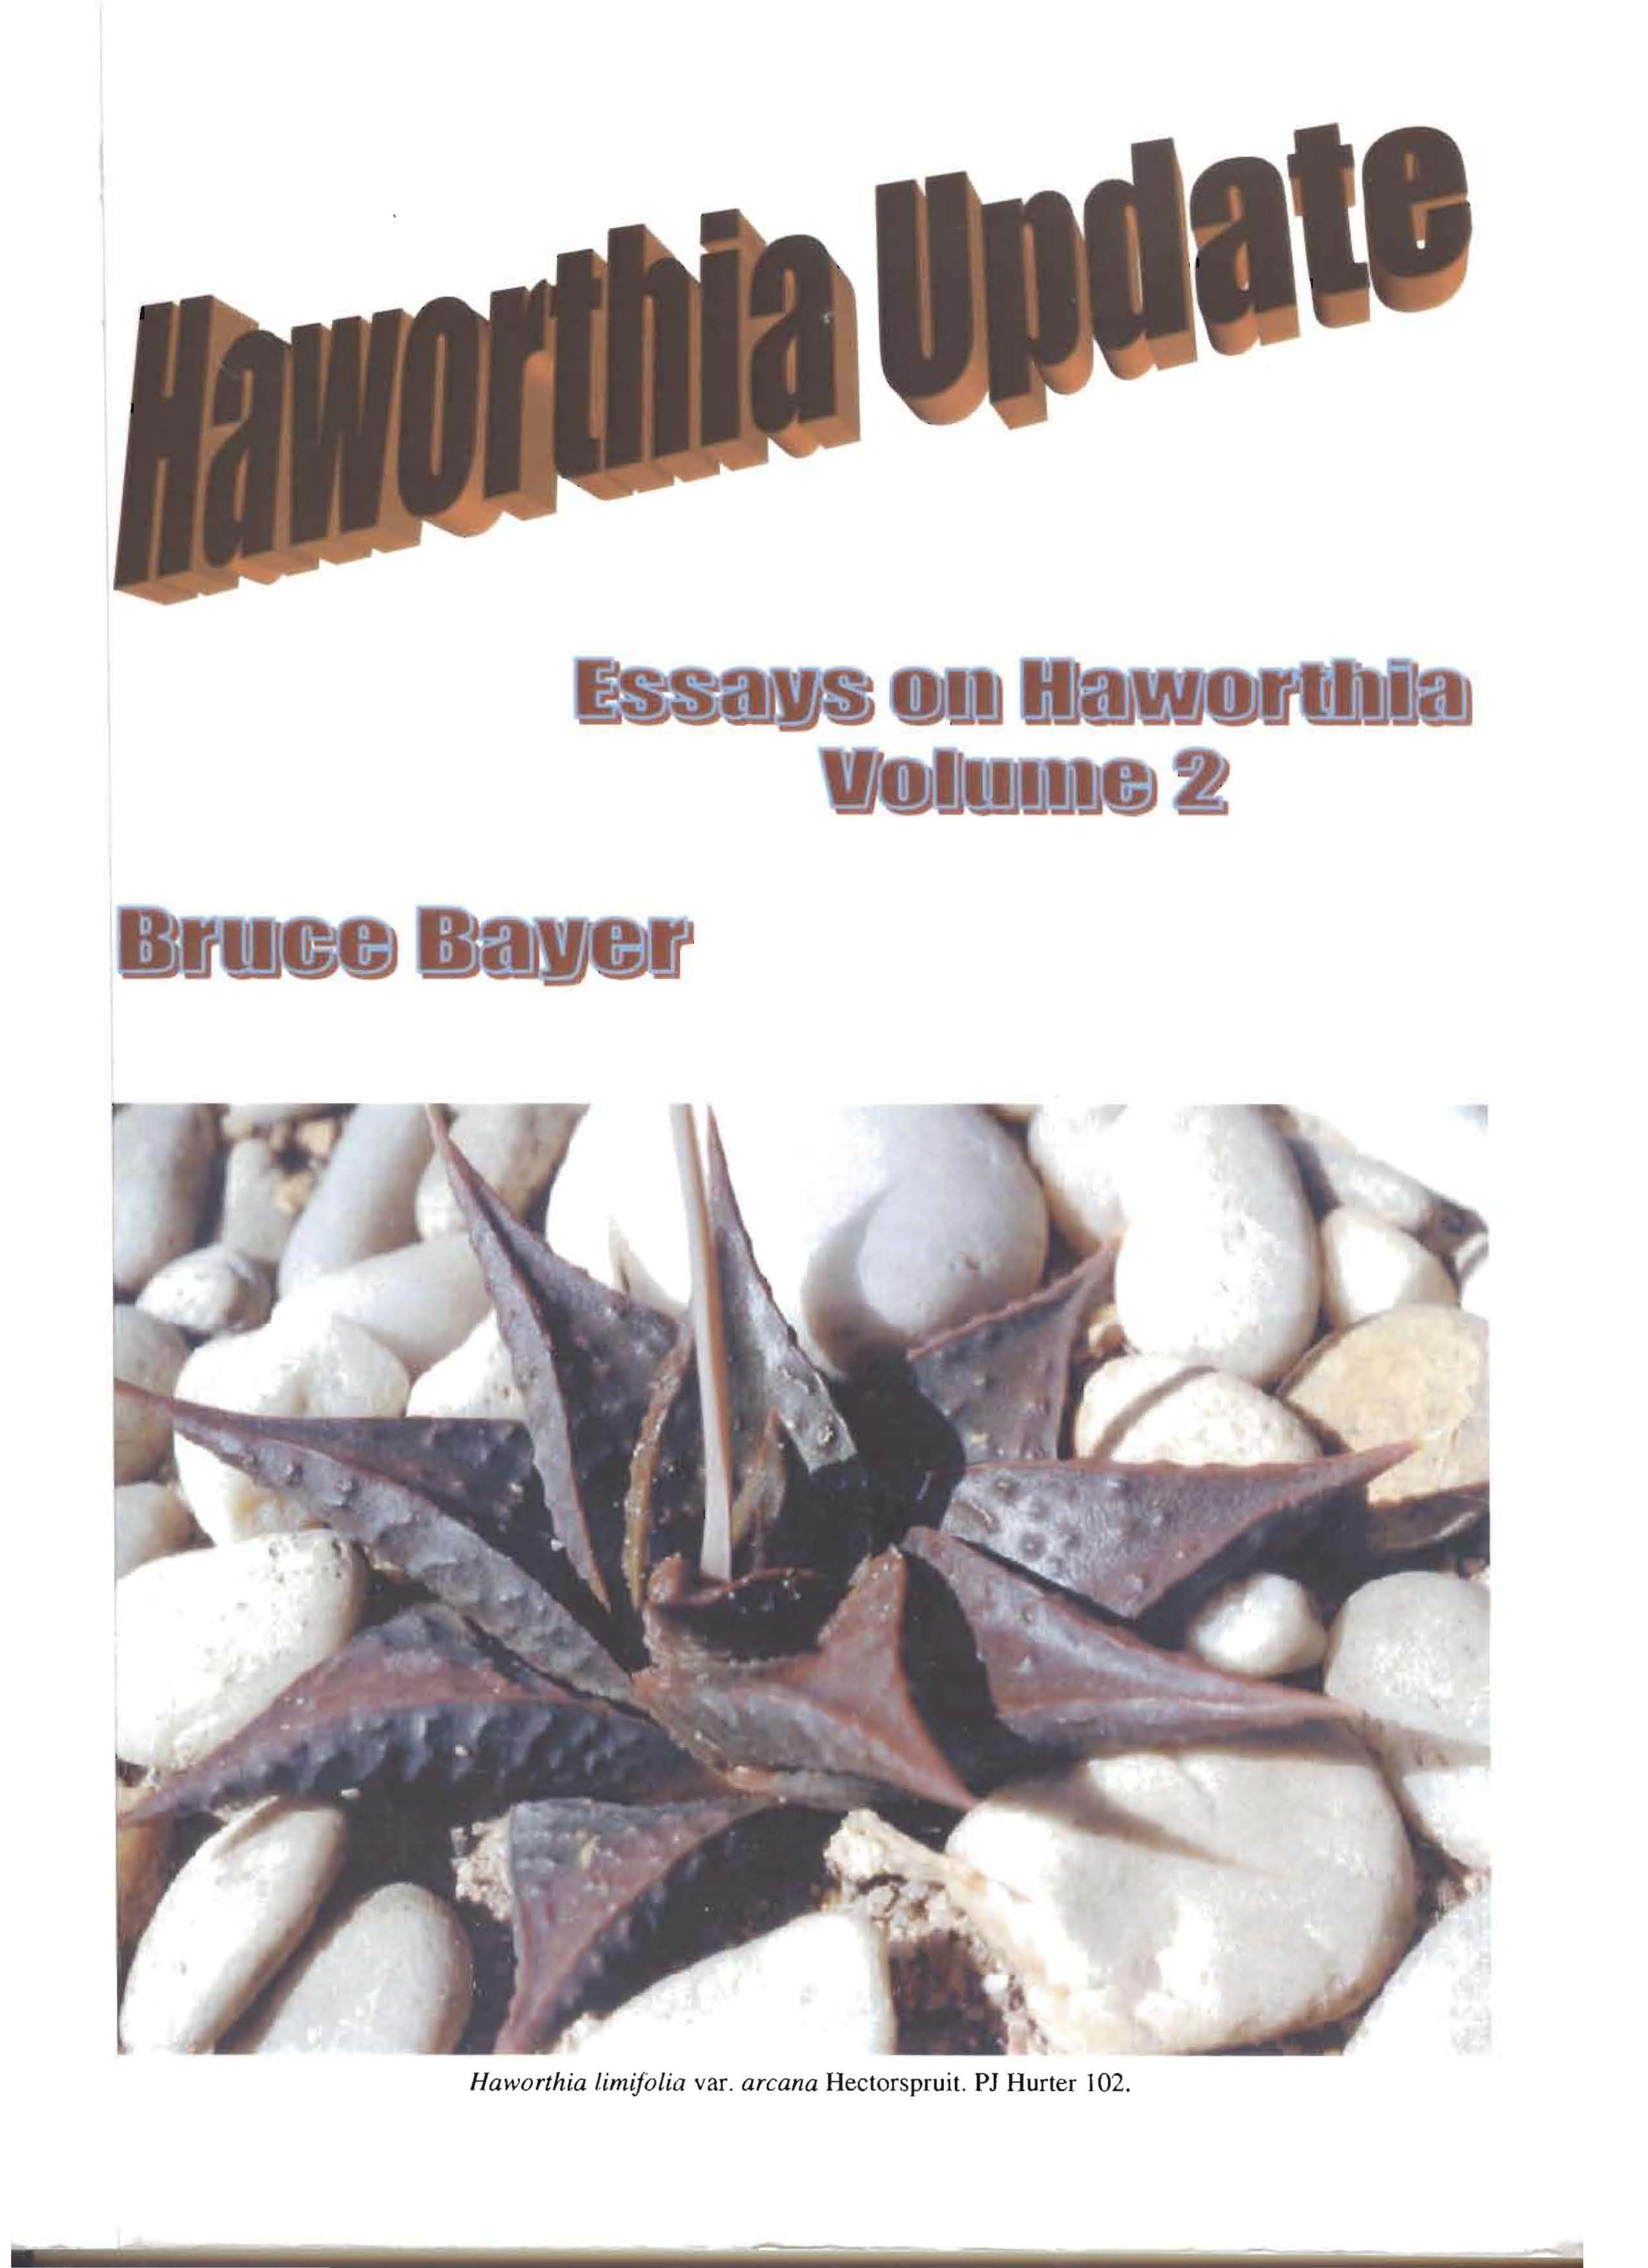 Haworthia Updates vol. 2